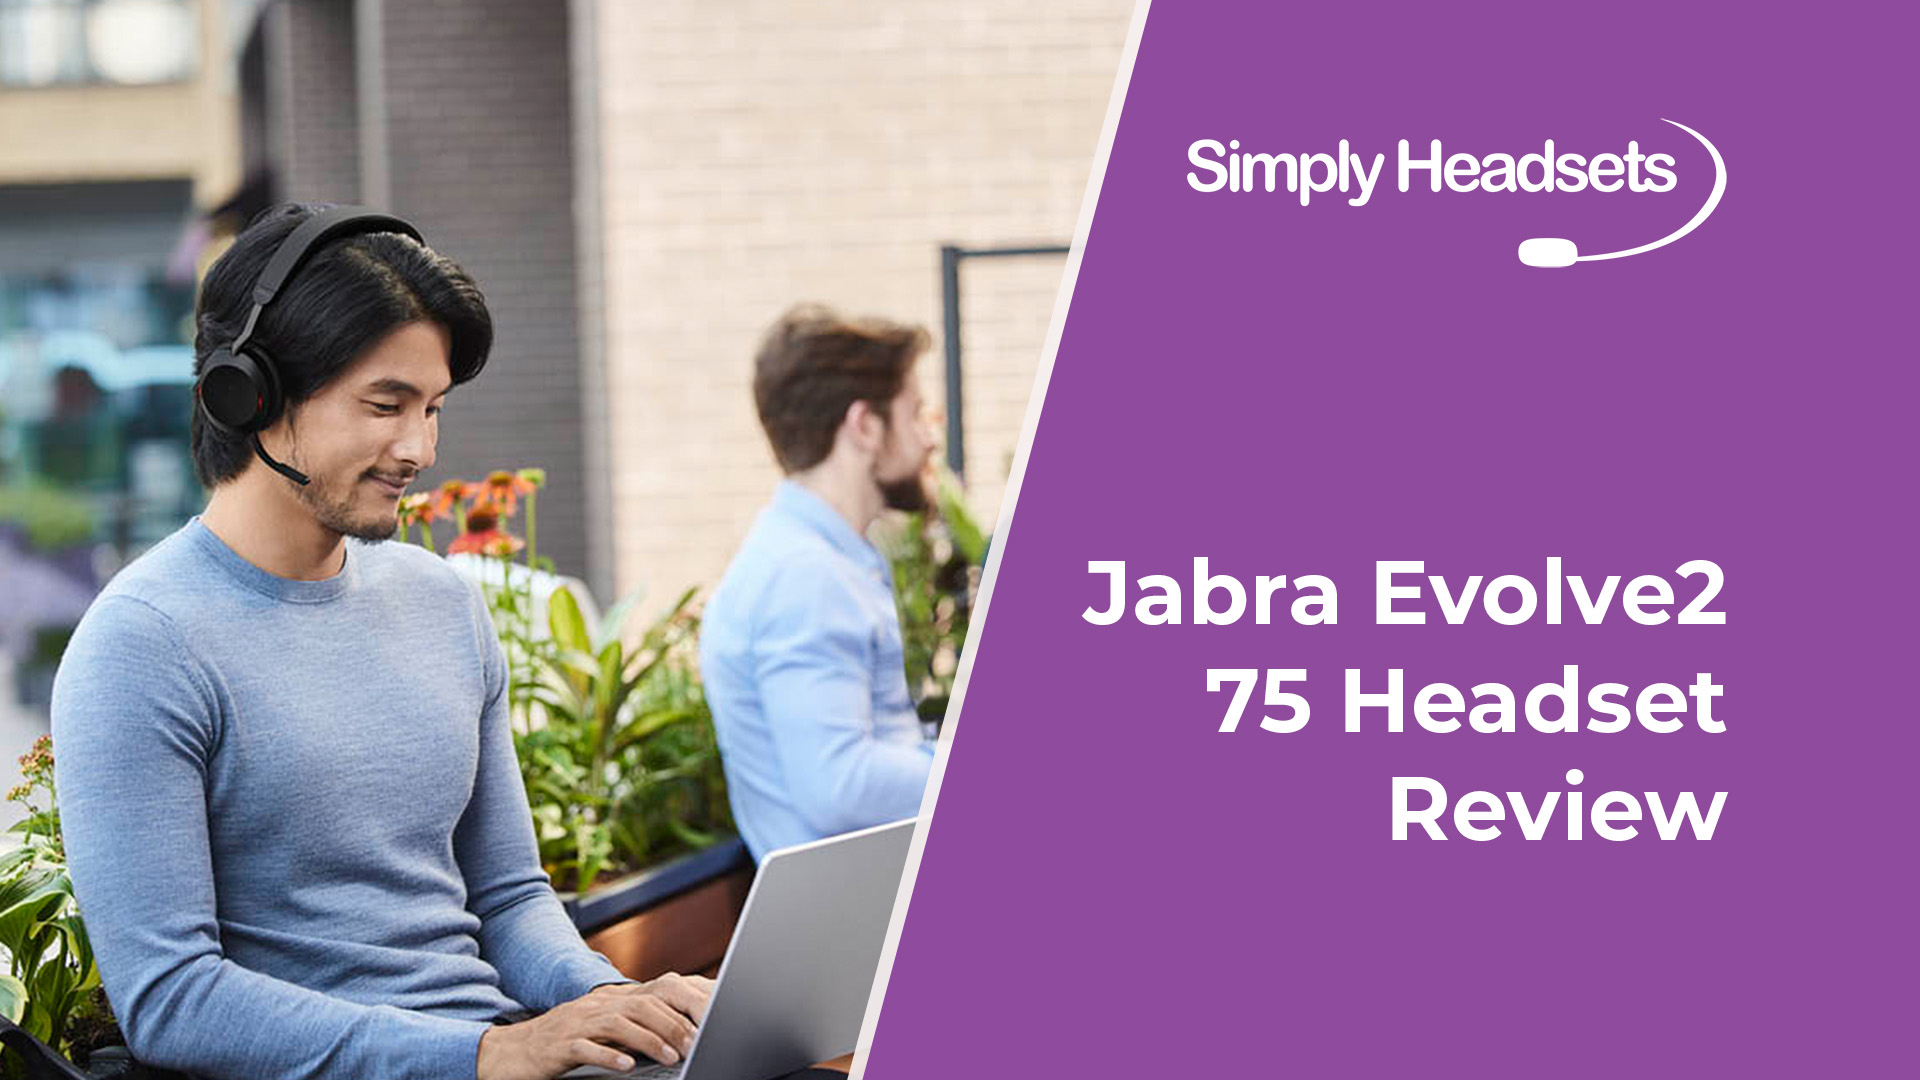 Review - The Jabra Evolve 75 headphones and stand. #Jabra